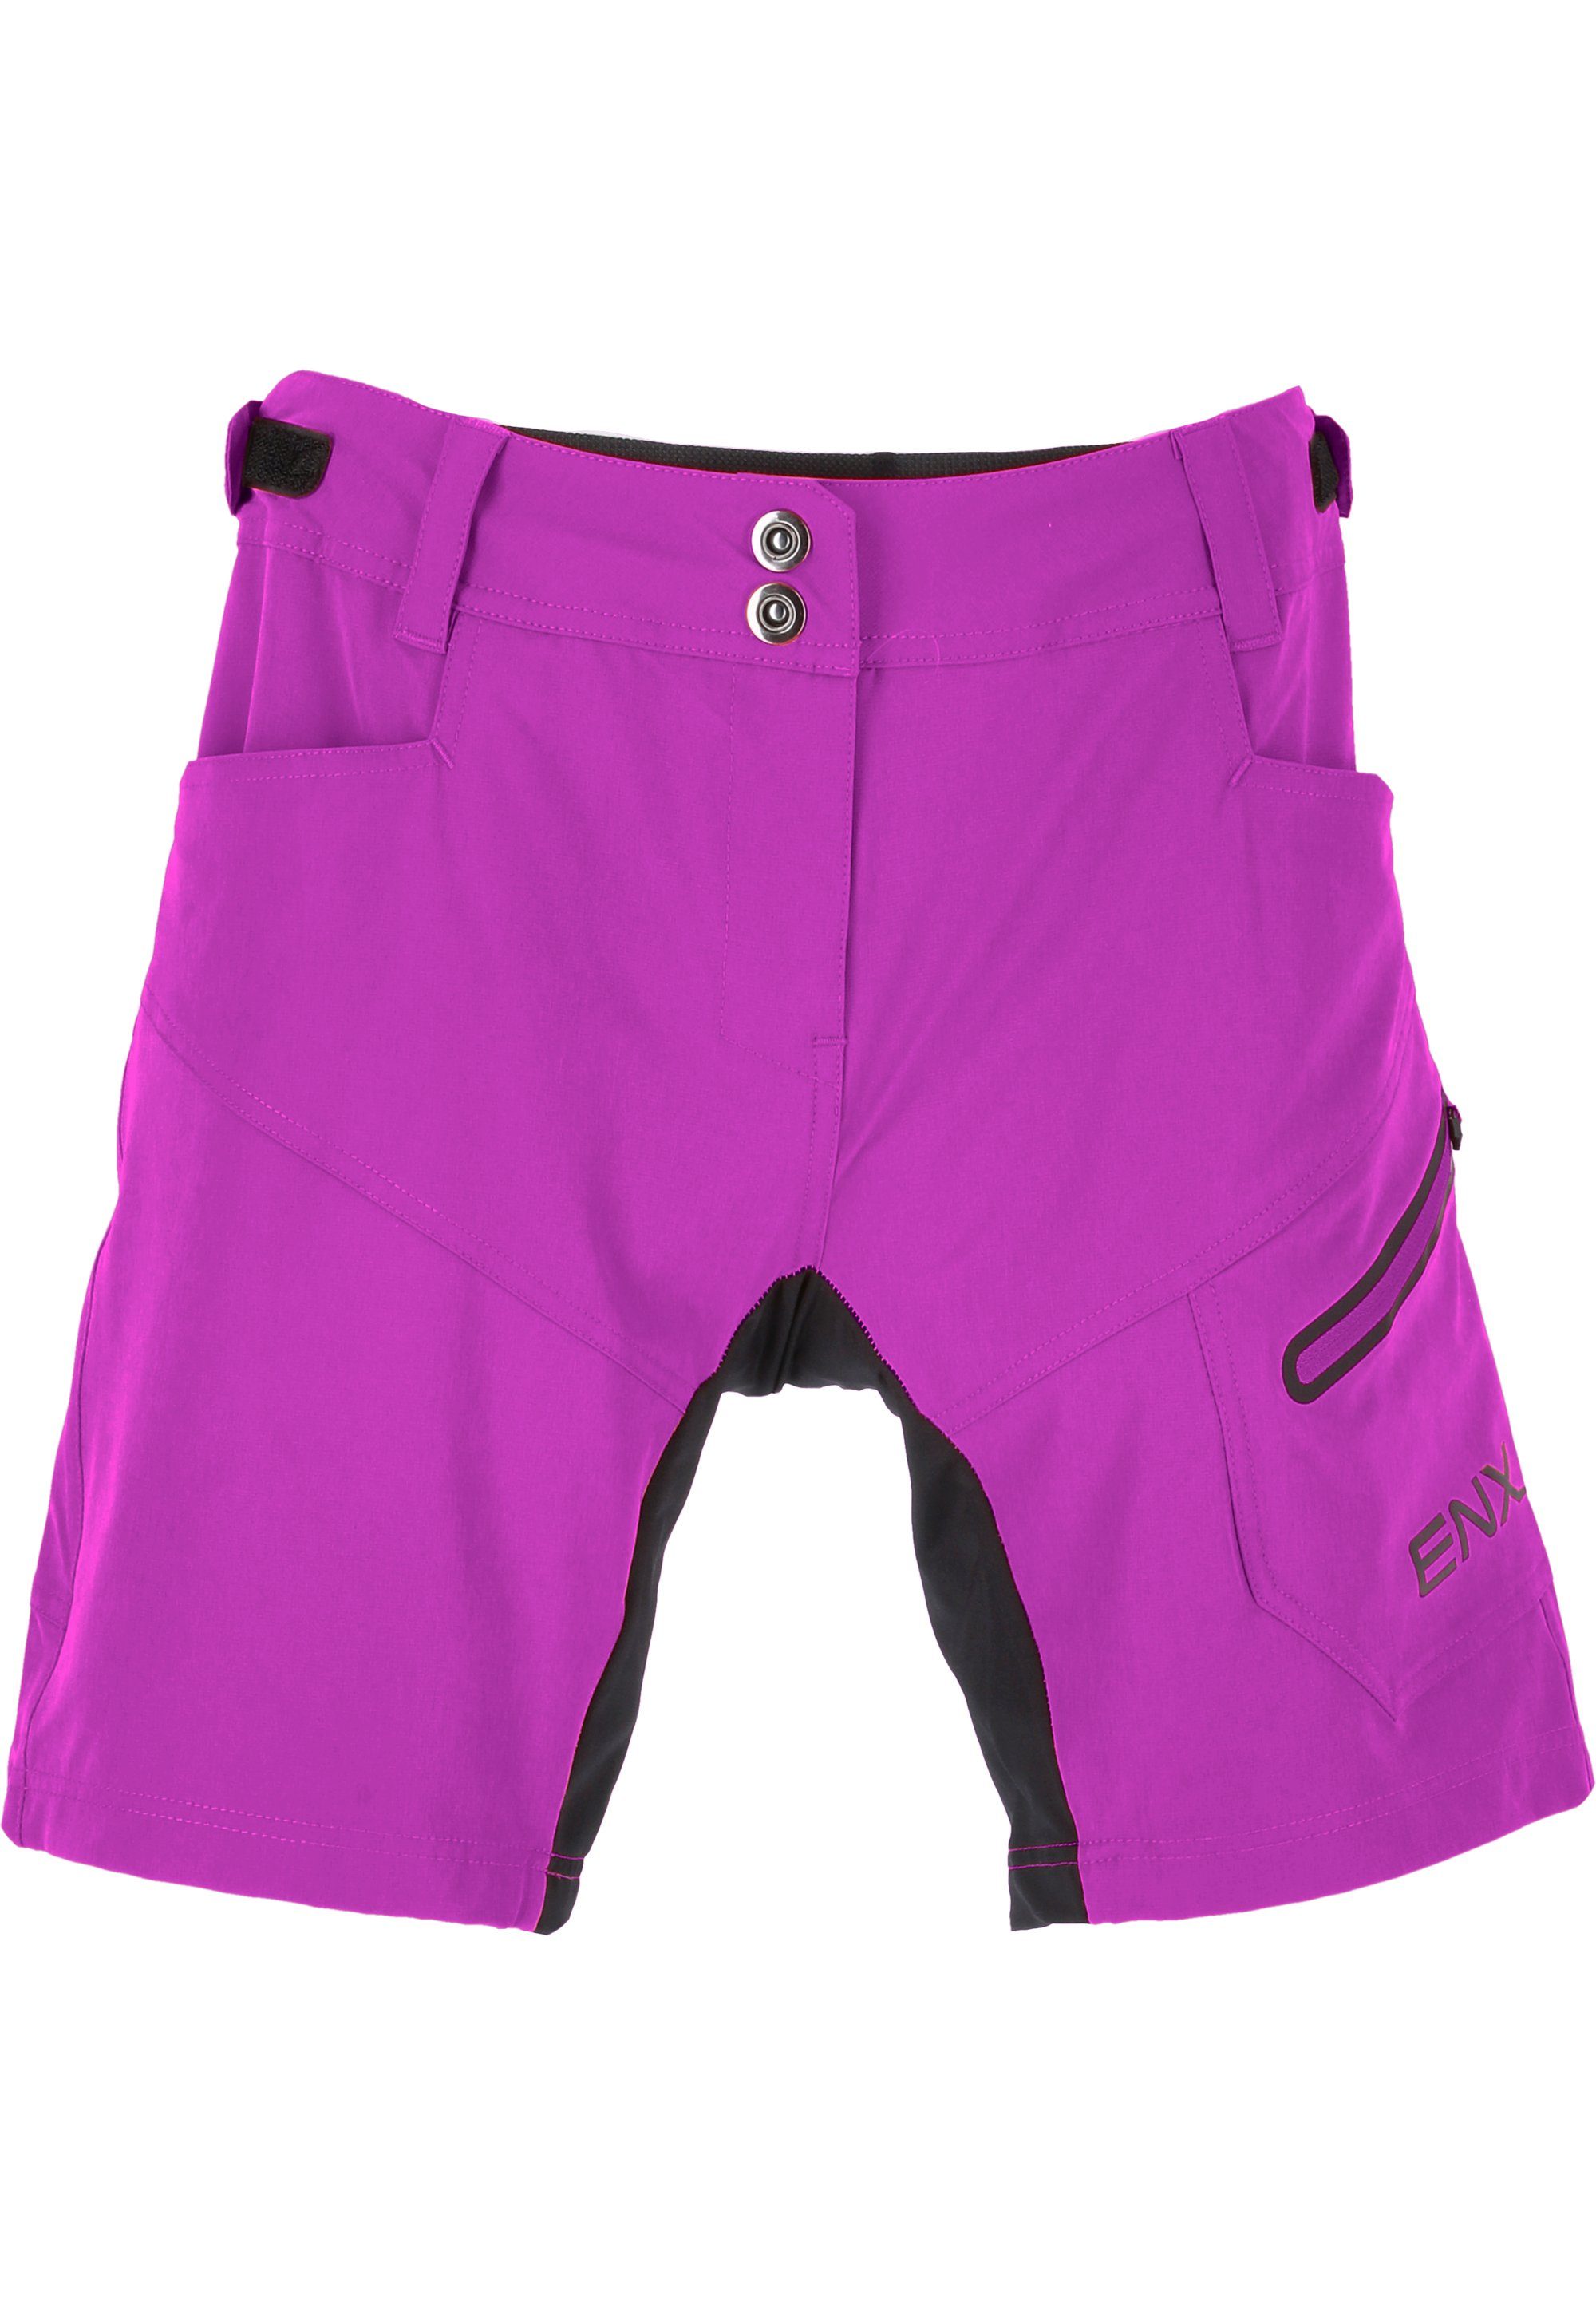 ENDURANCE Radhose Jamilla herausnehmbarer 2 1 W mit Shorts in Innen-Tights lila